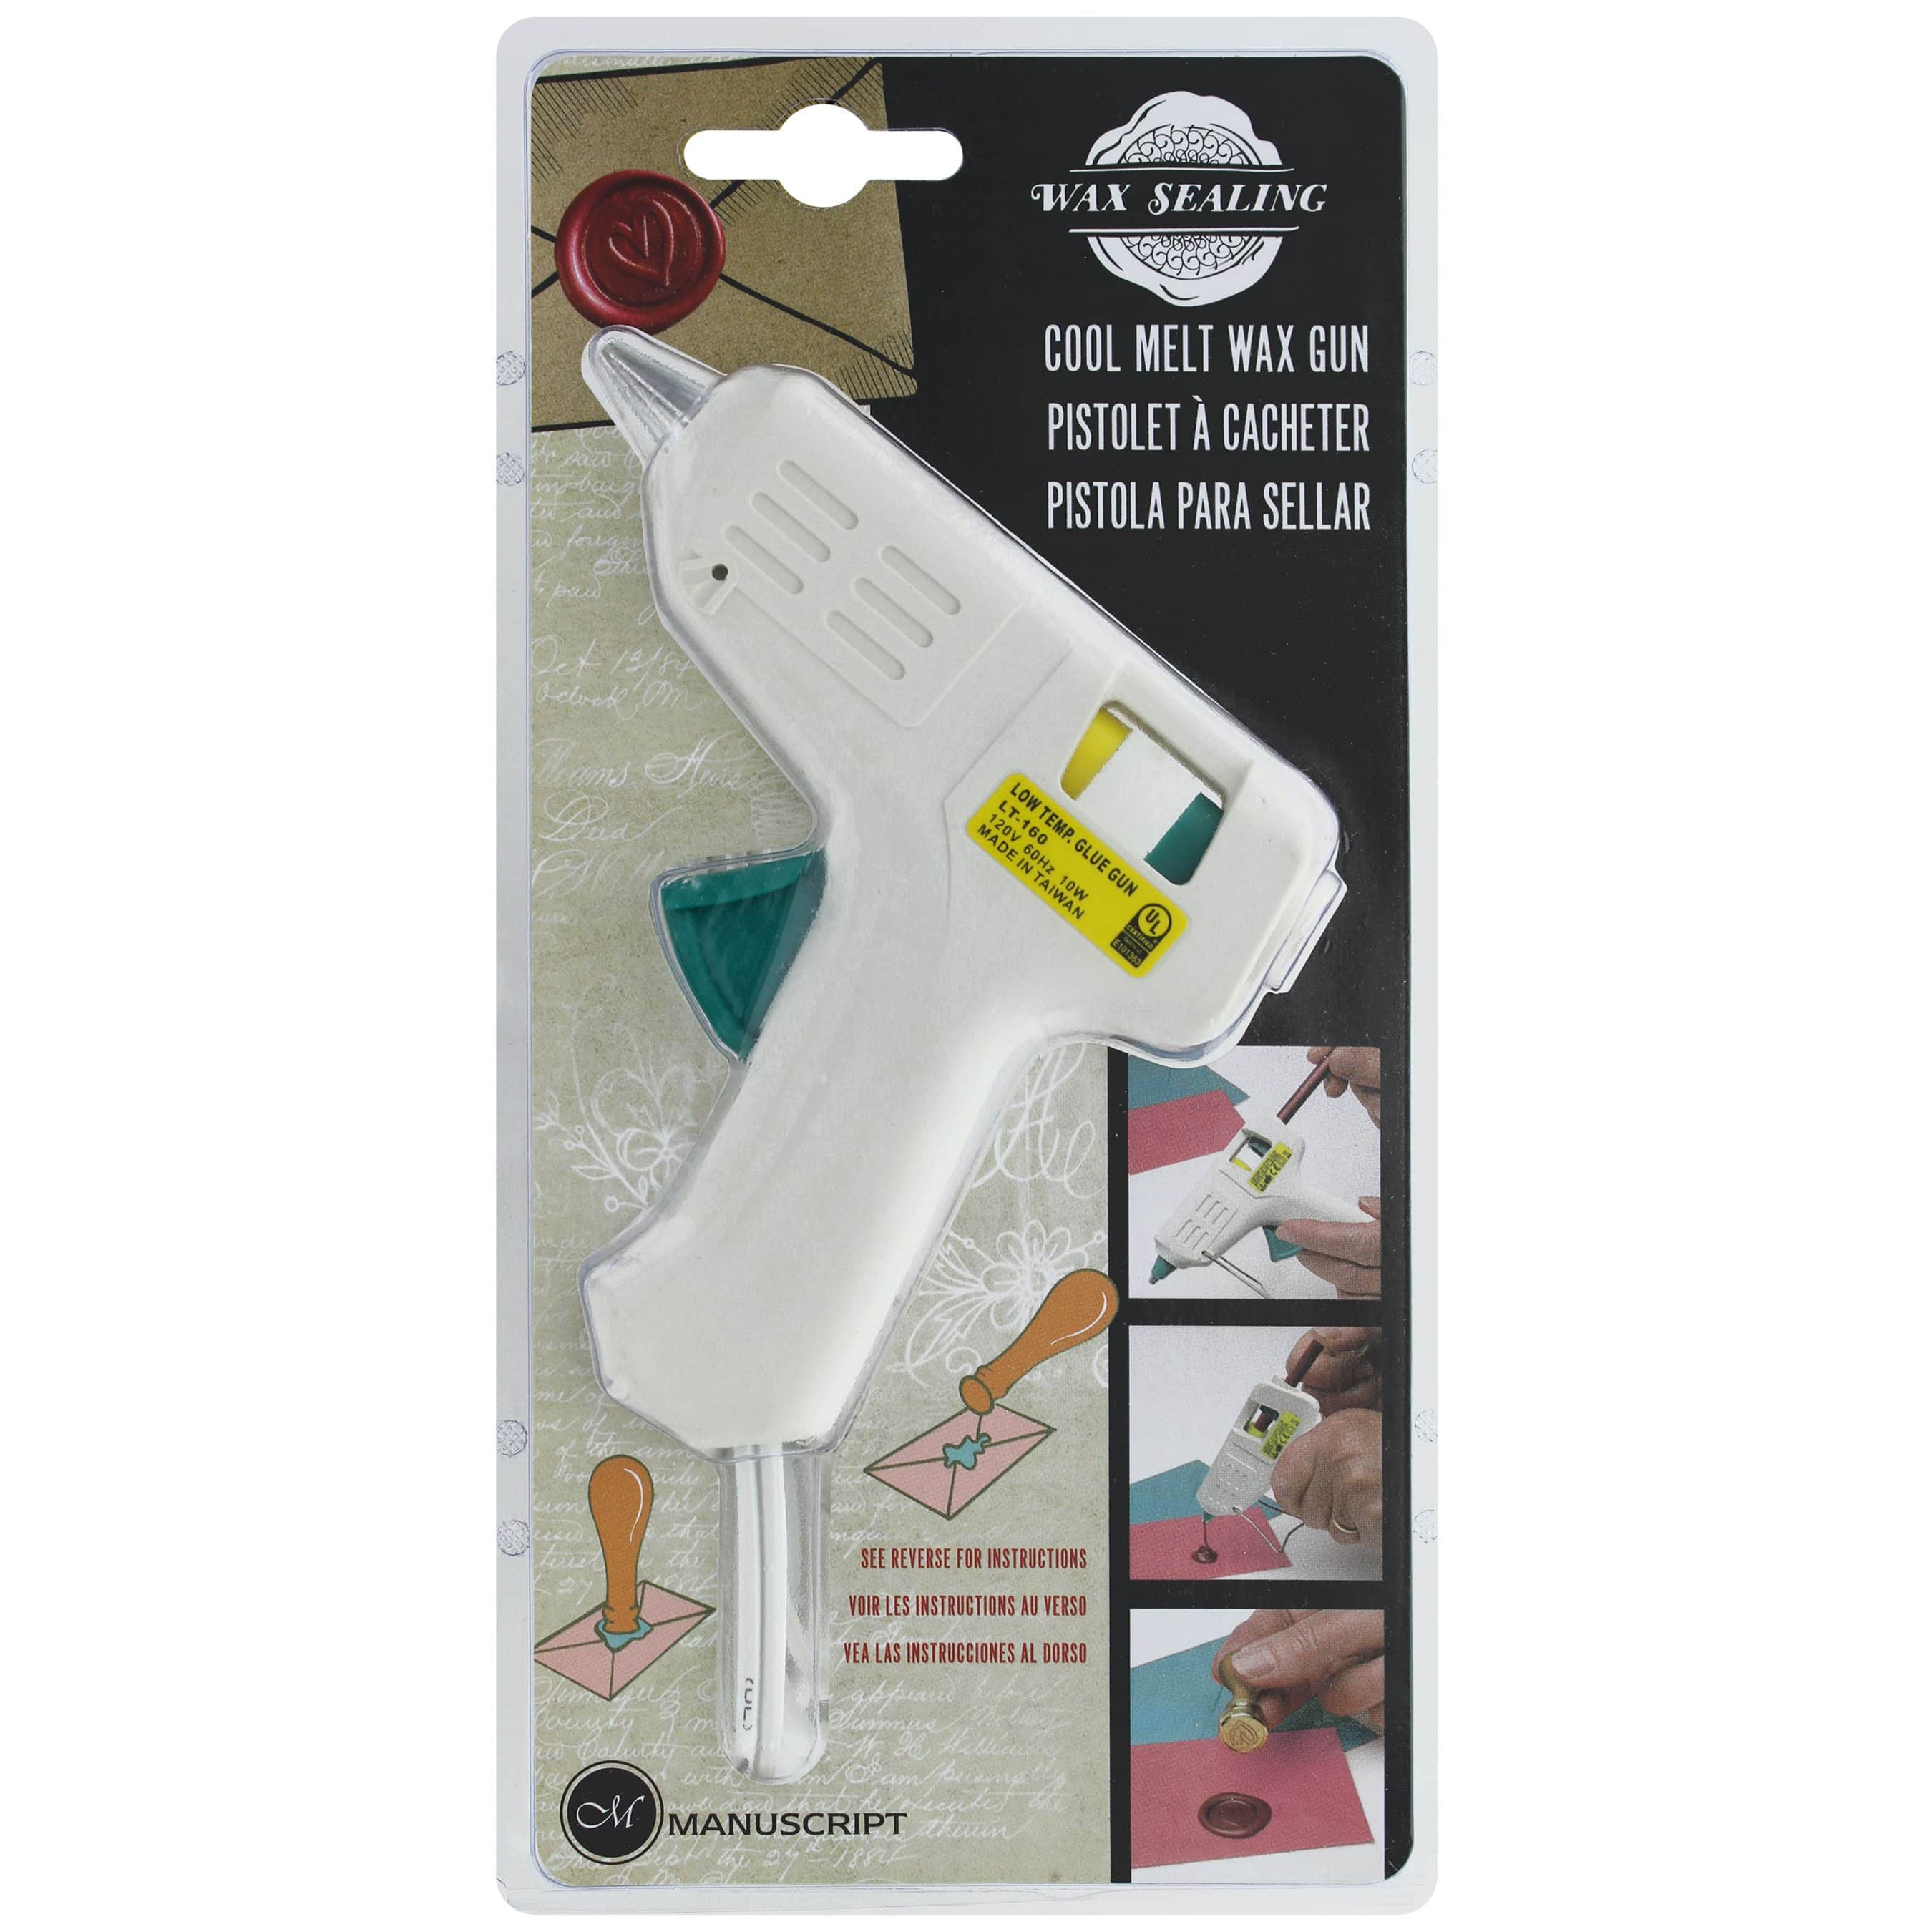 10 Pieces Glue Gun Sealing Wax Sticks for Wax Seal Stamp, Great